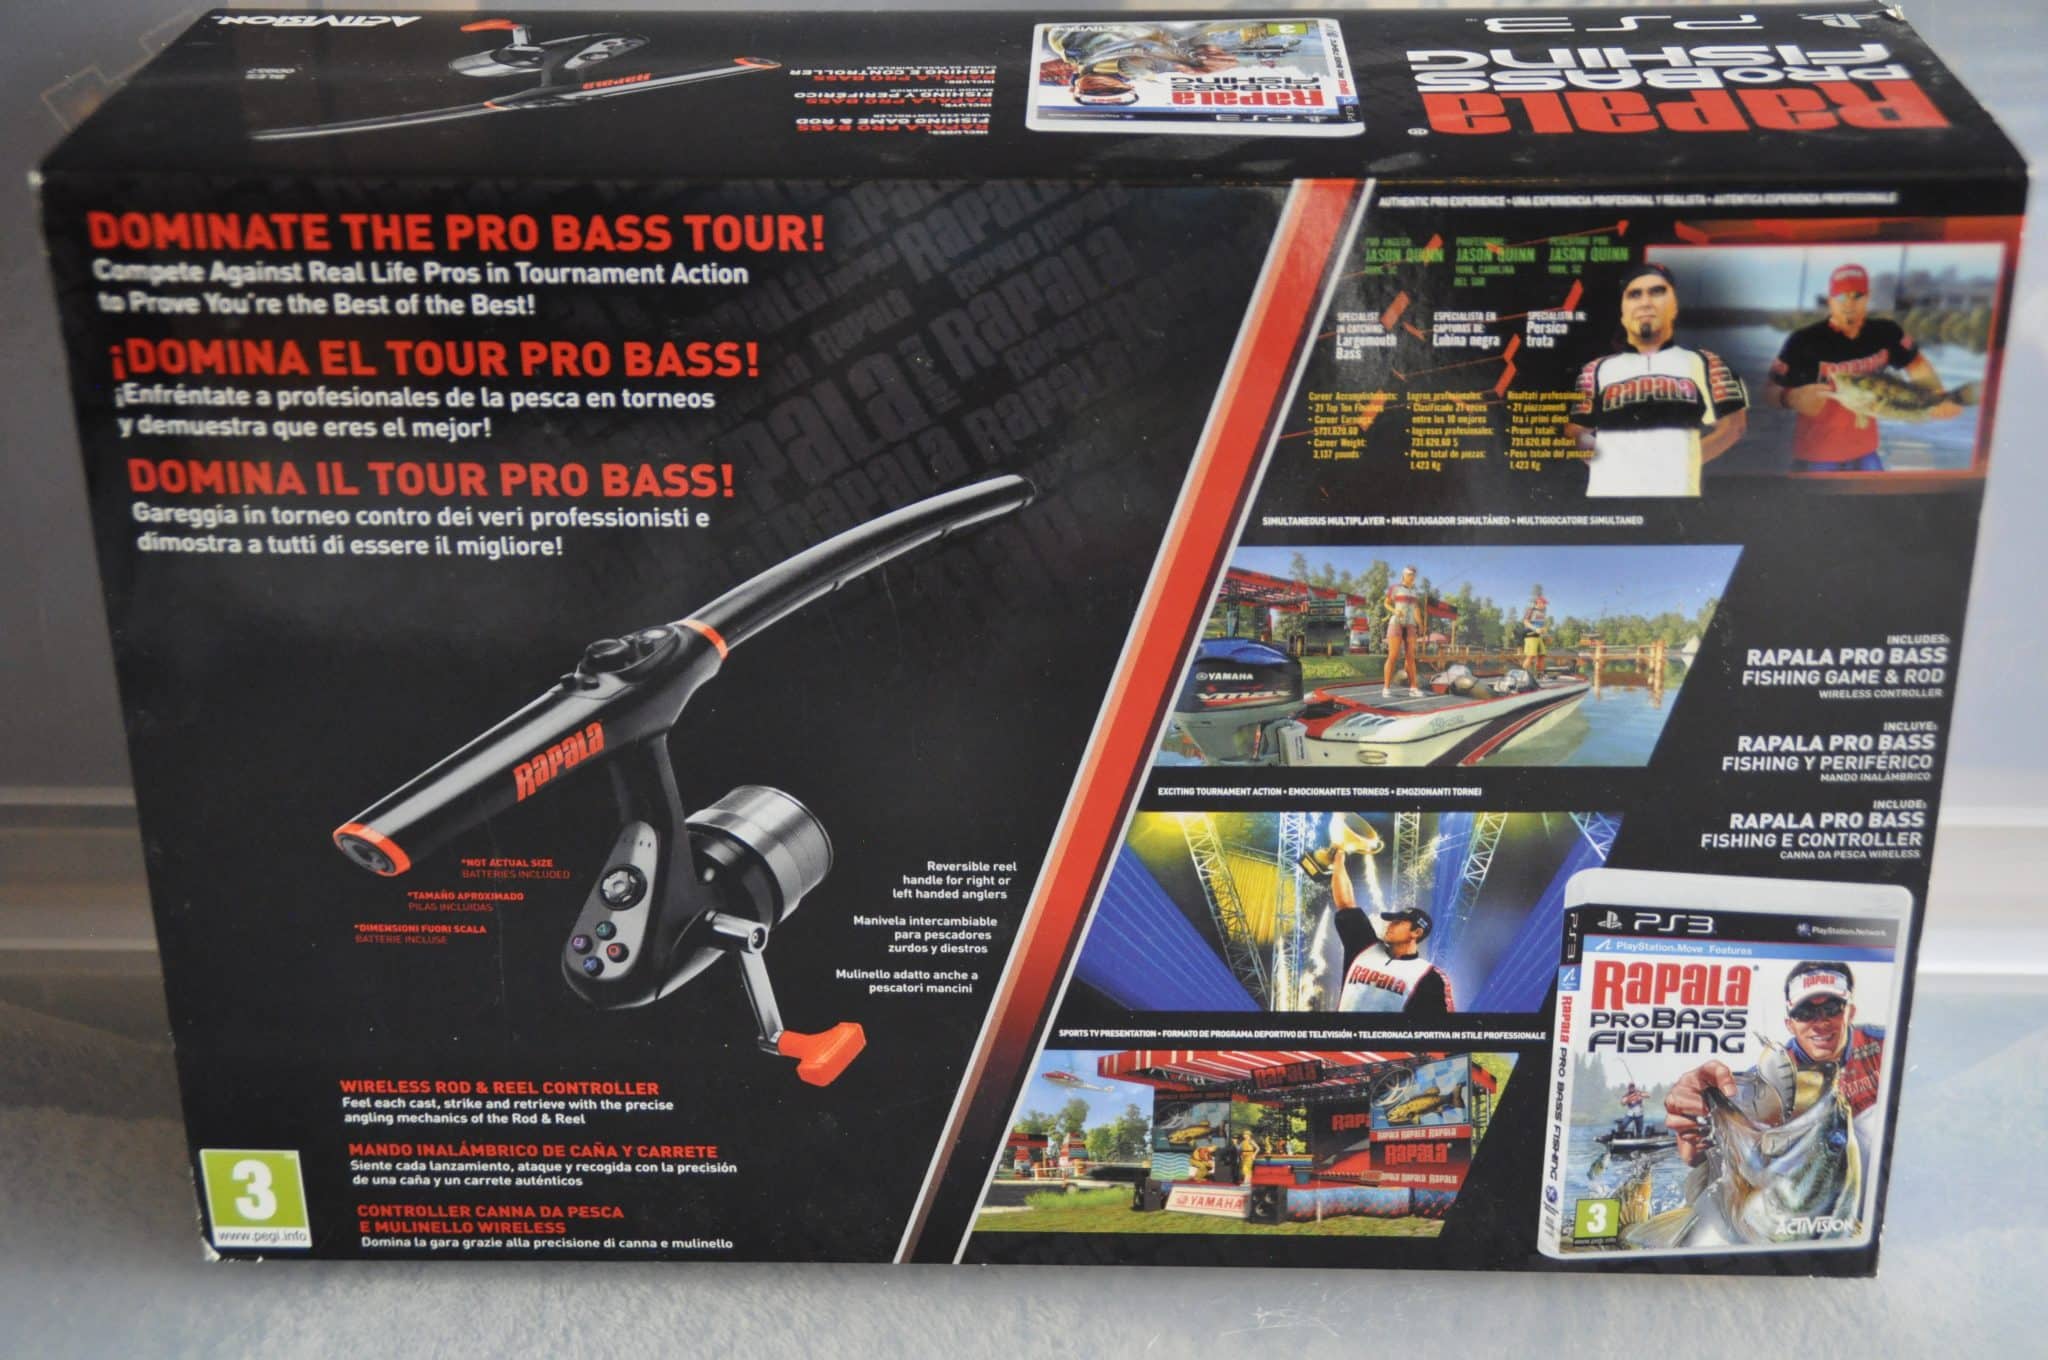 Like New Xbox 360 Rapala Pro Bass Fishing Game With Fishing Rod